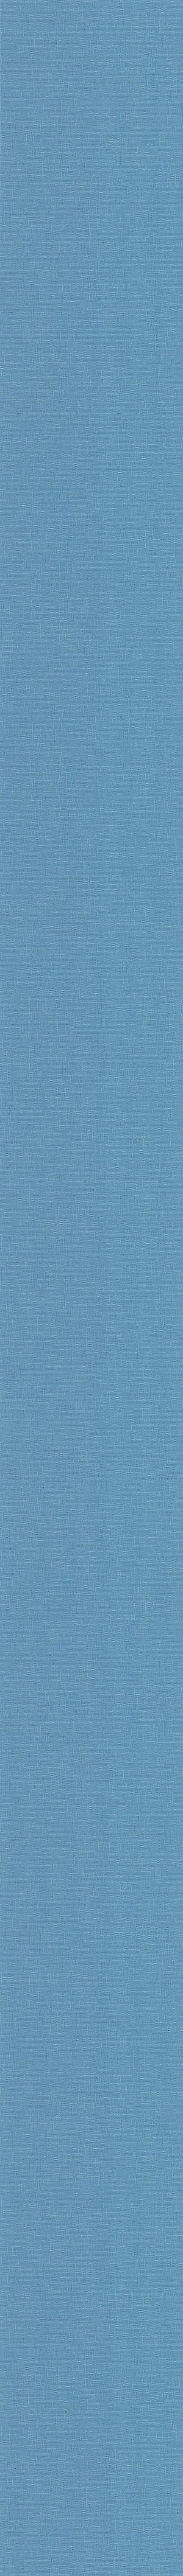 Ткань-Сиде-голубой